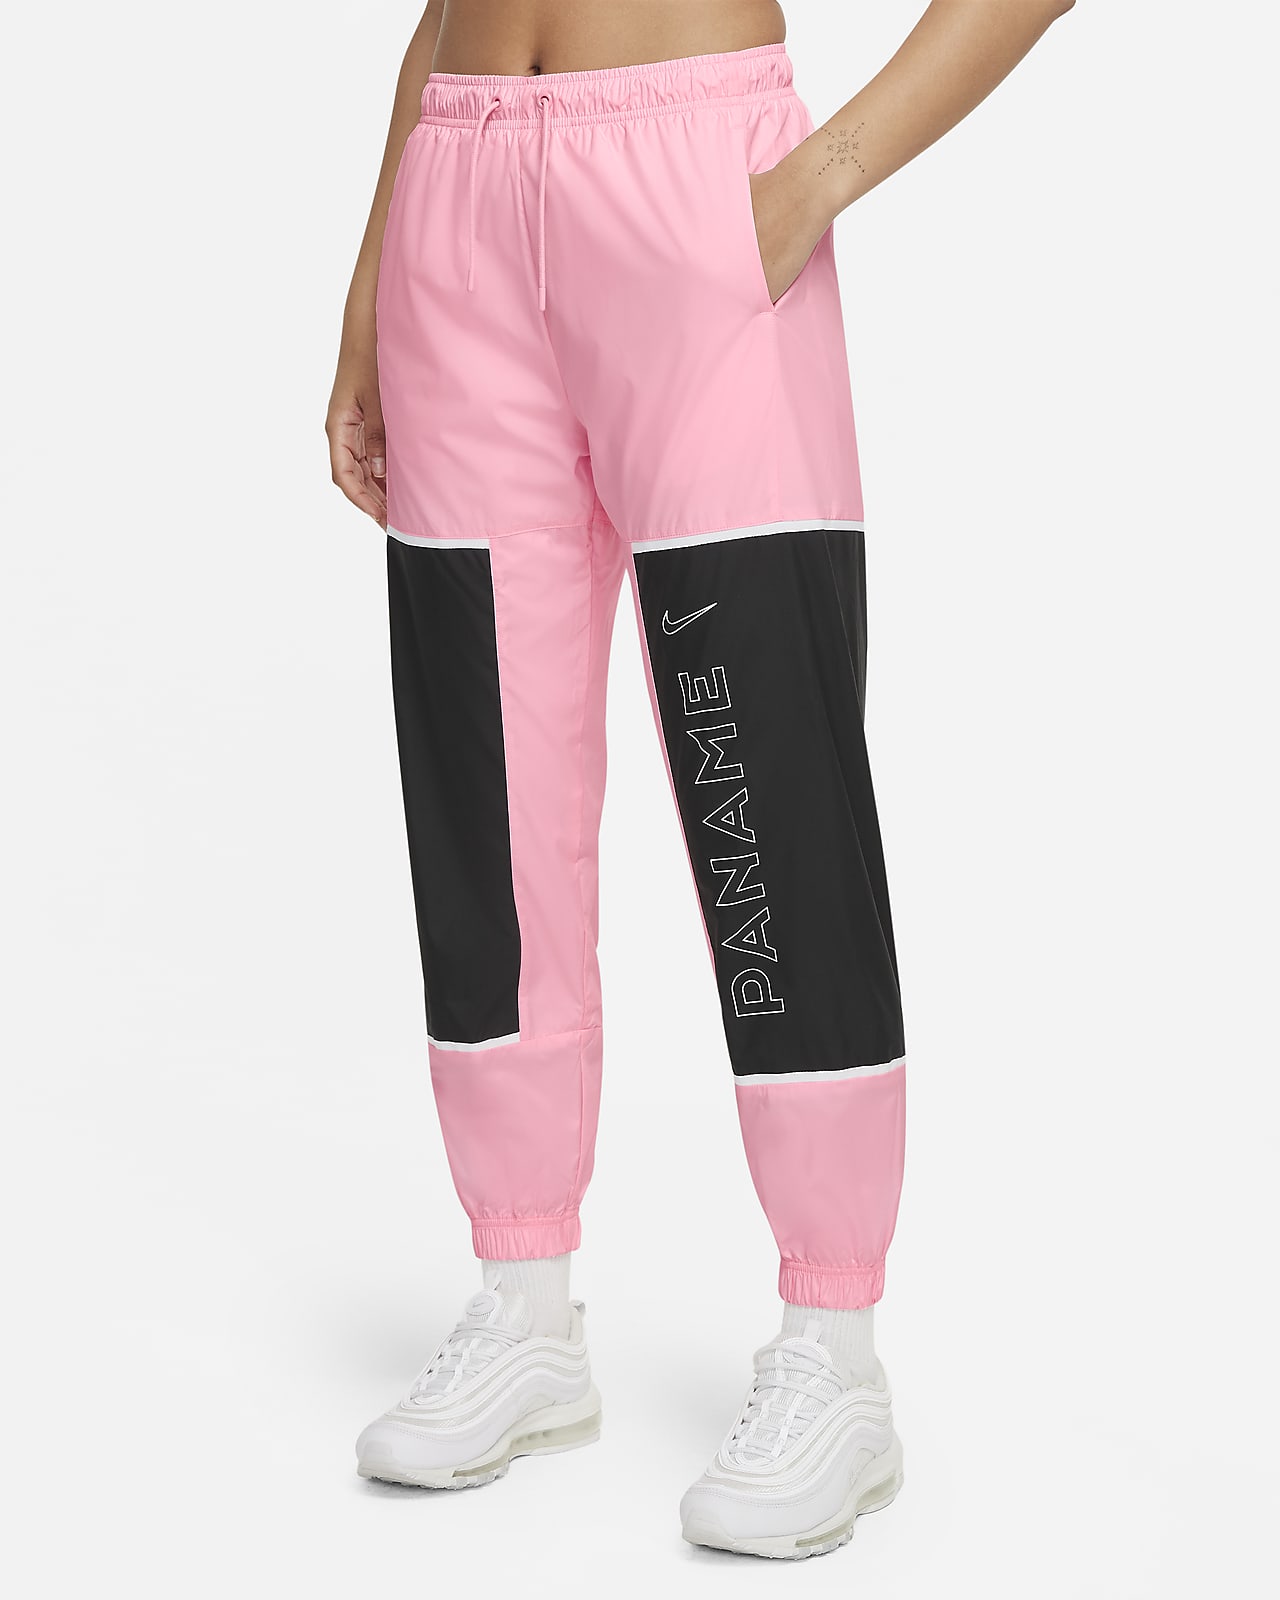 Paris Saint-Germain Nike Youth Swoosh T-Shirt - Pink